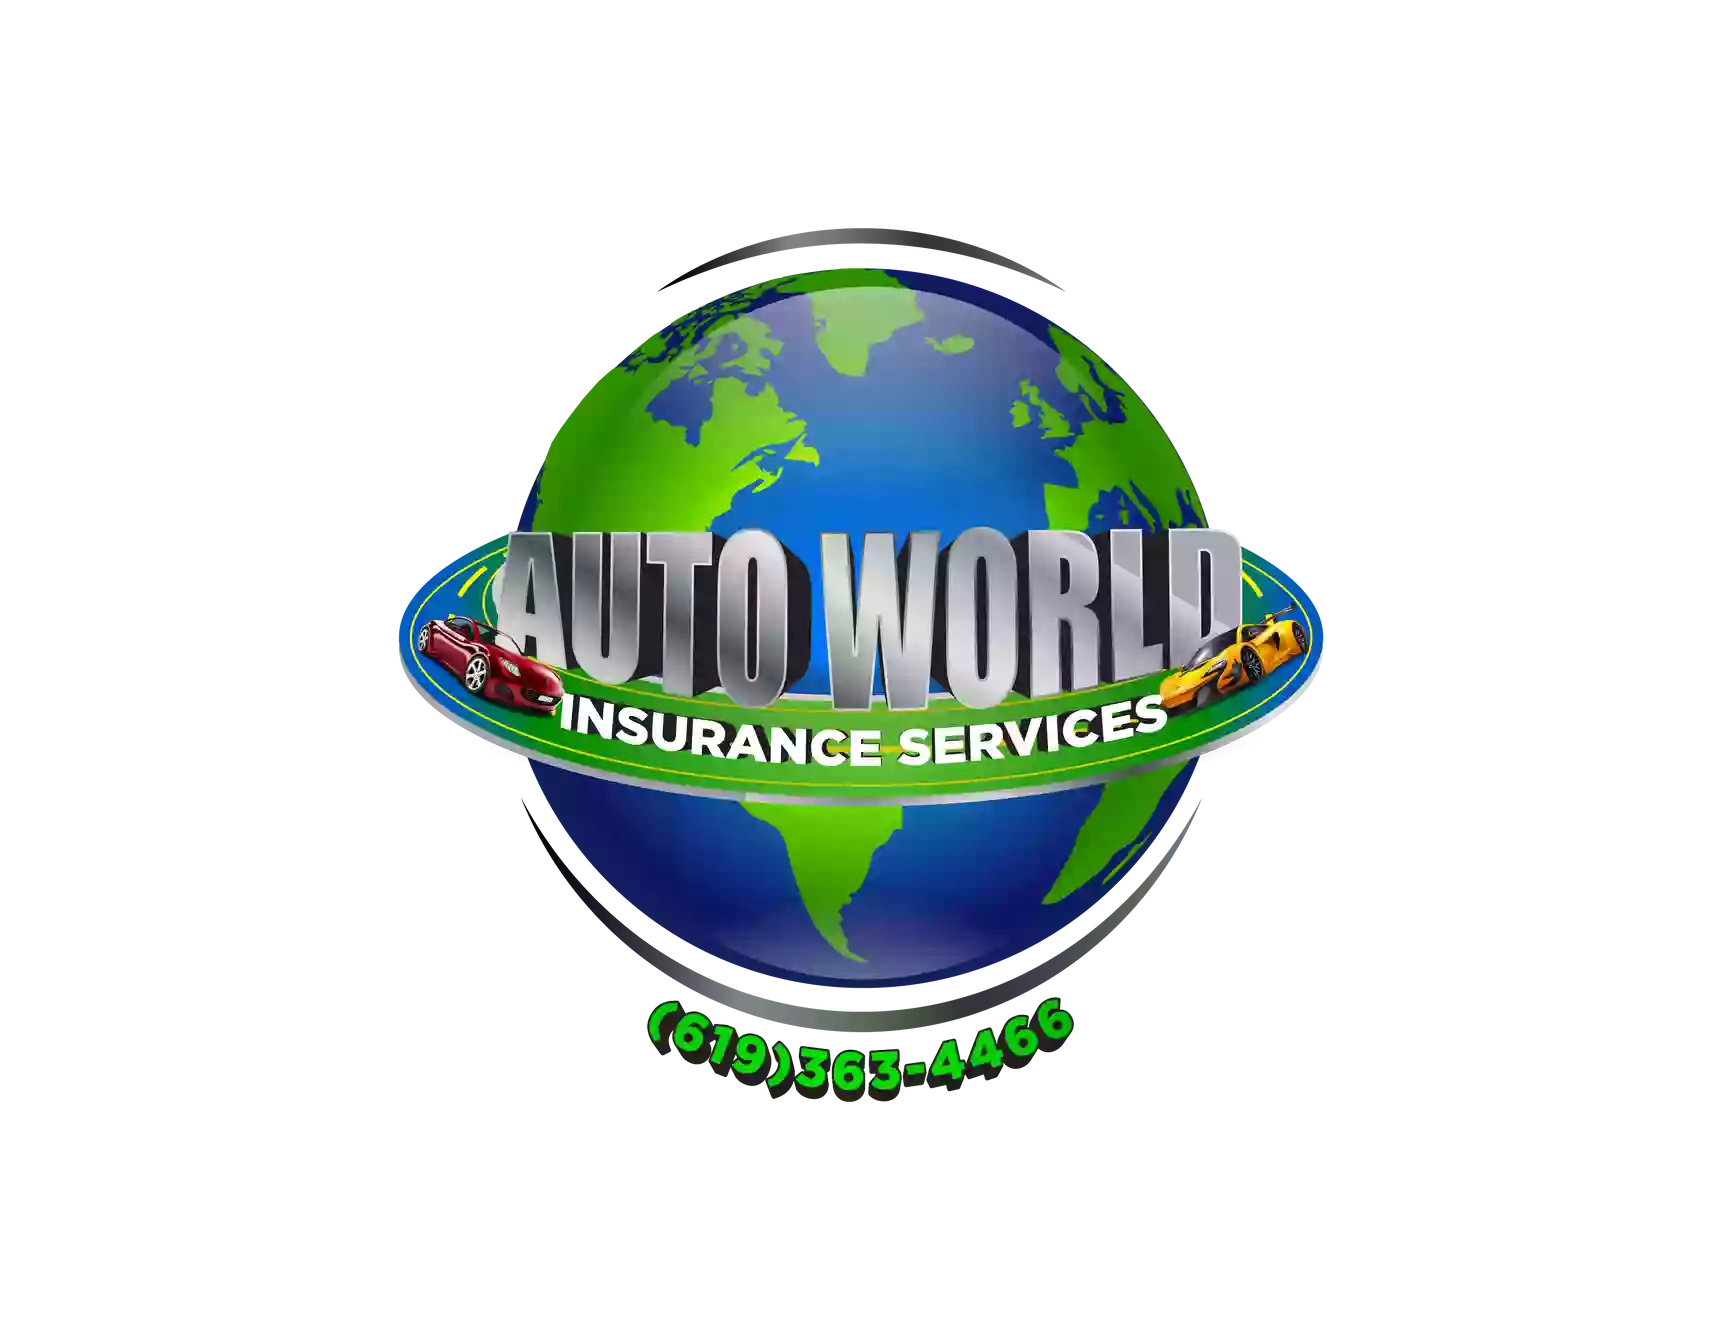 Auto World Insurance Services